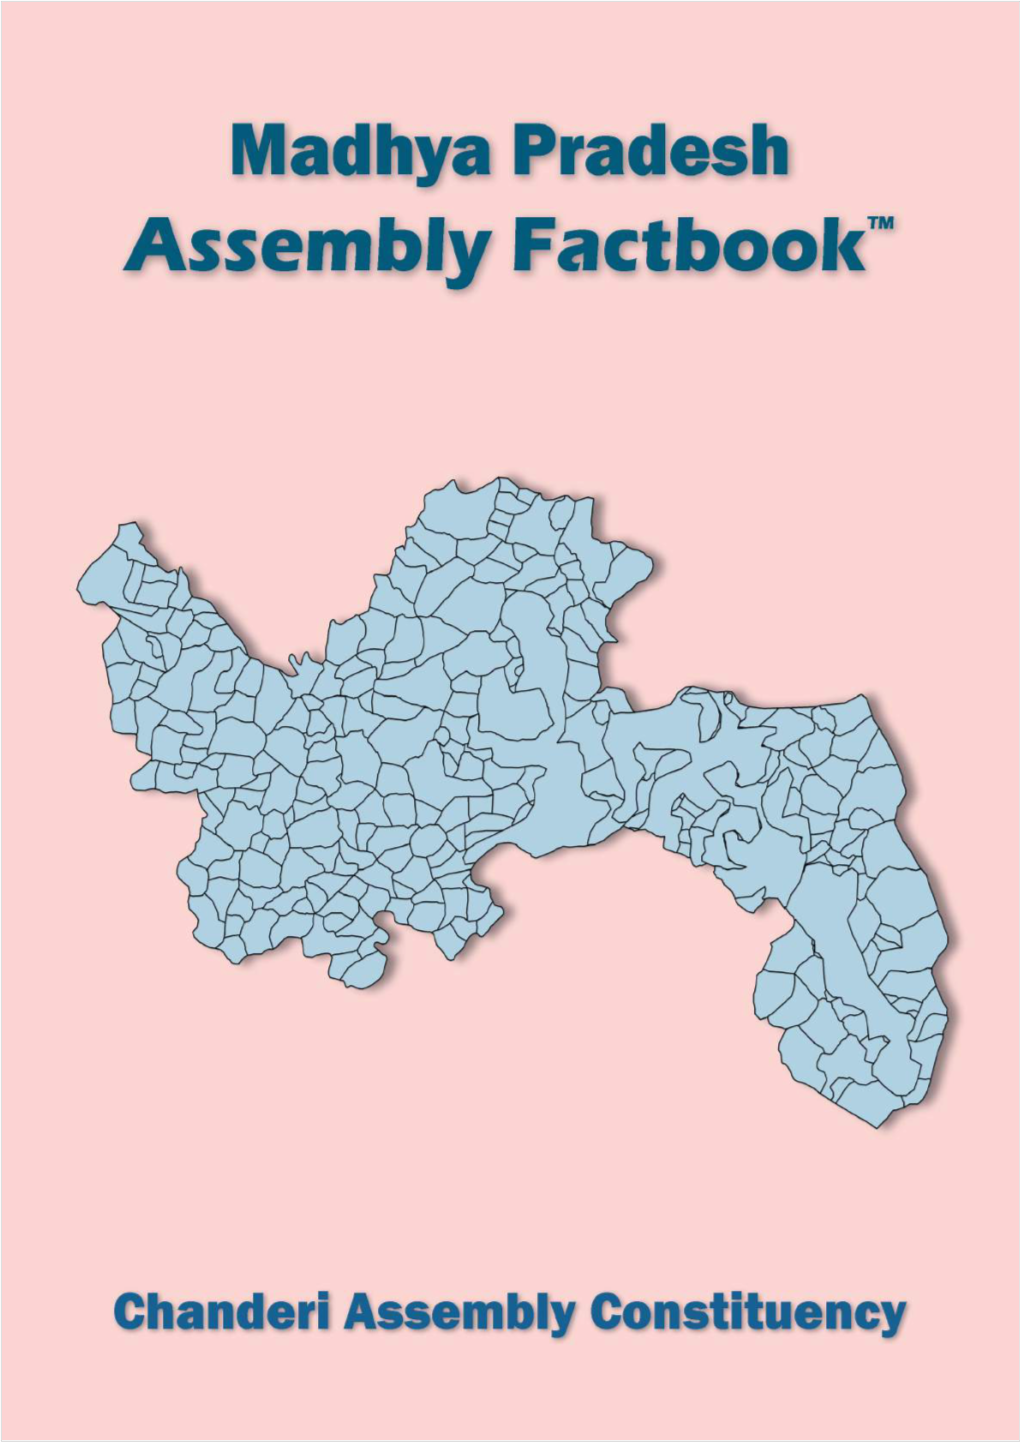 Chanderi Assembly Madhya Pradesh Factbook